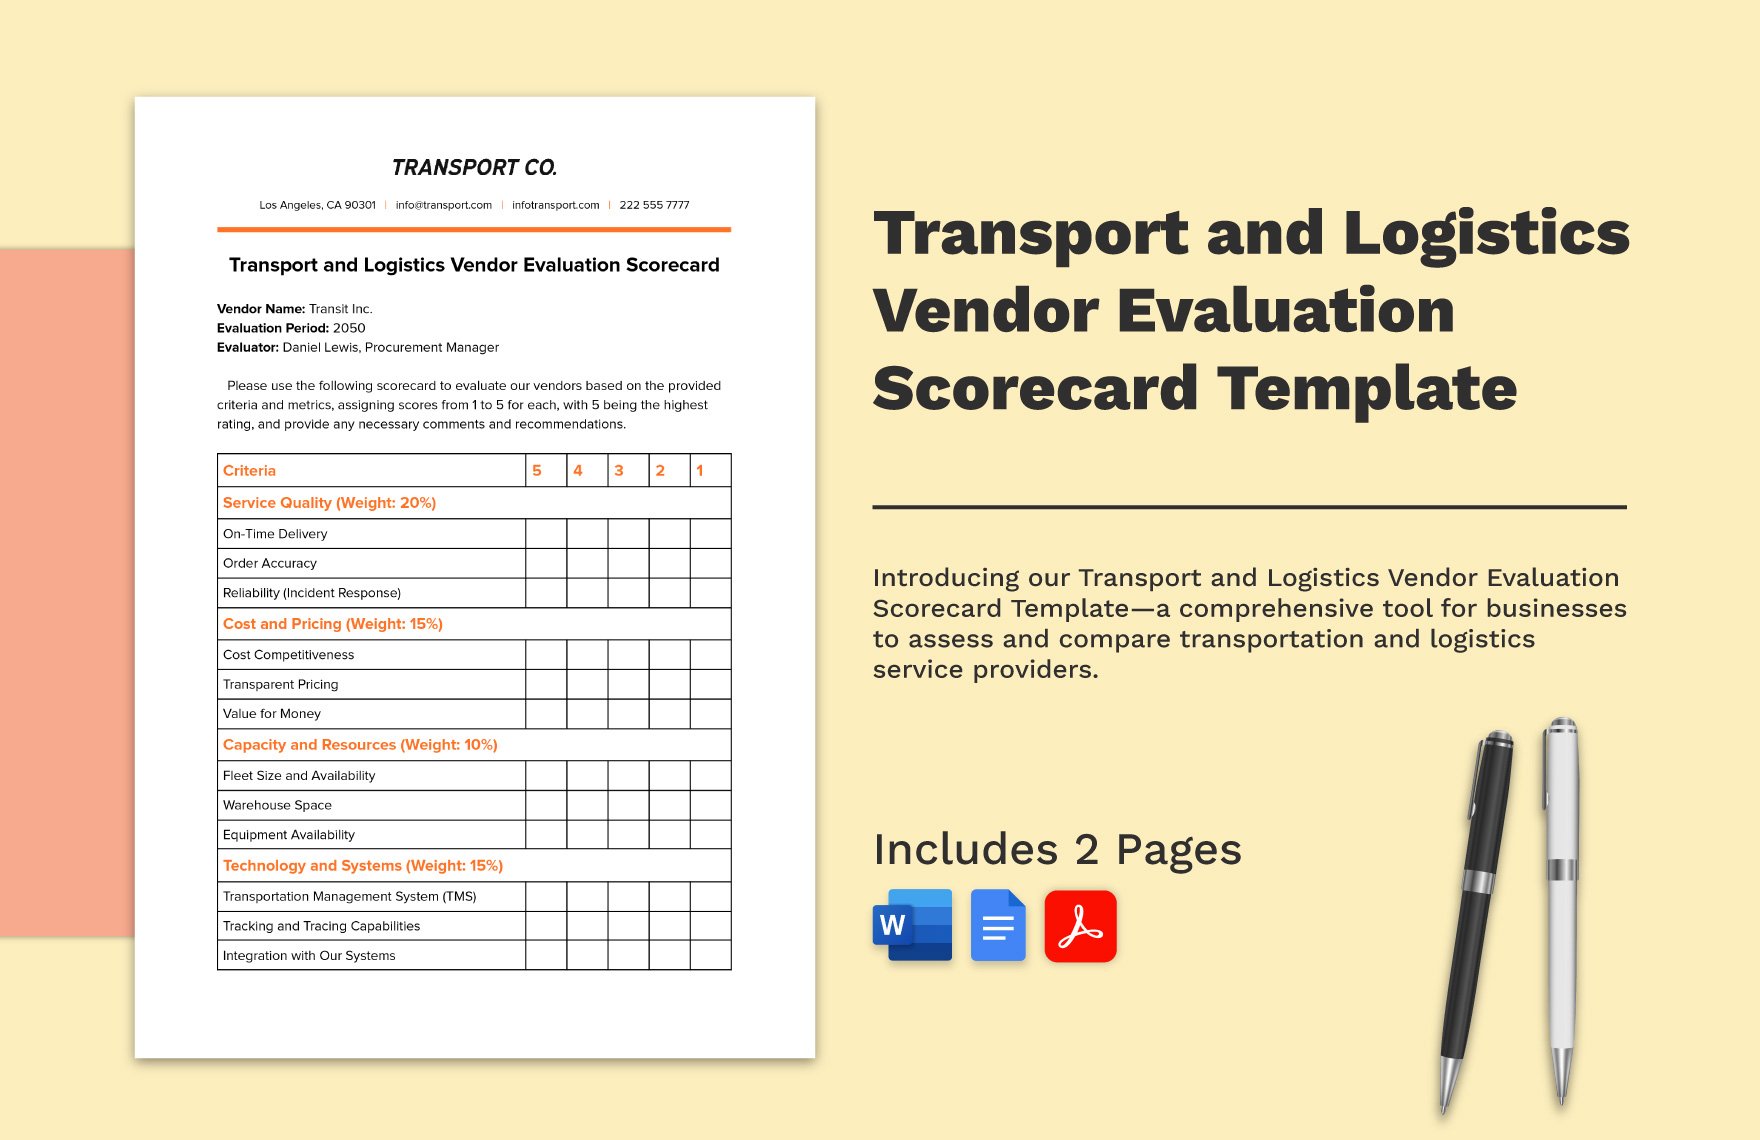 Transport and Logistics Vendor Evaluation Scorecard Template in Word, Google Docs, PDF